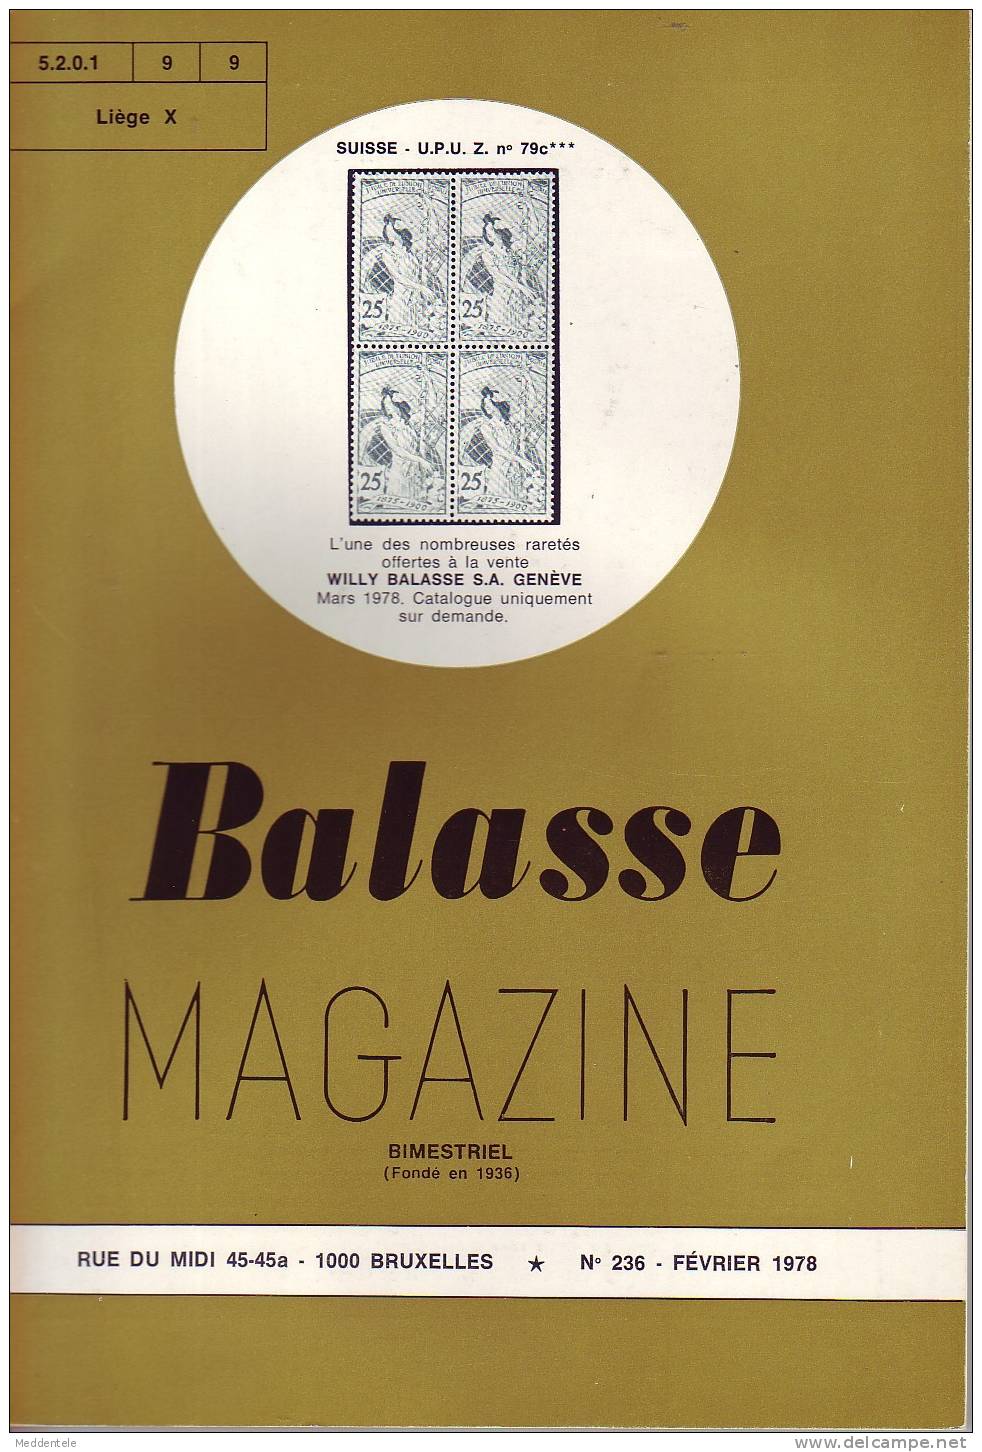 BALASSE MAGAZINE N° 236 - Francés (desde 1941)